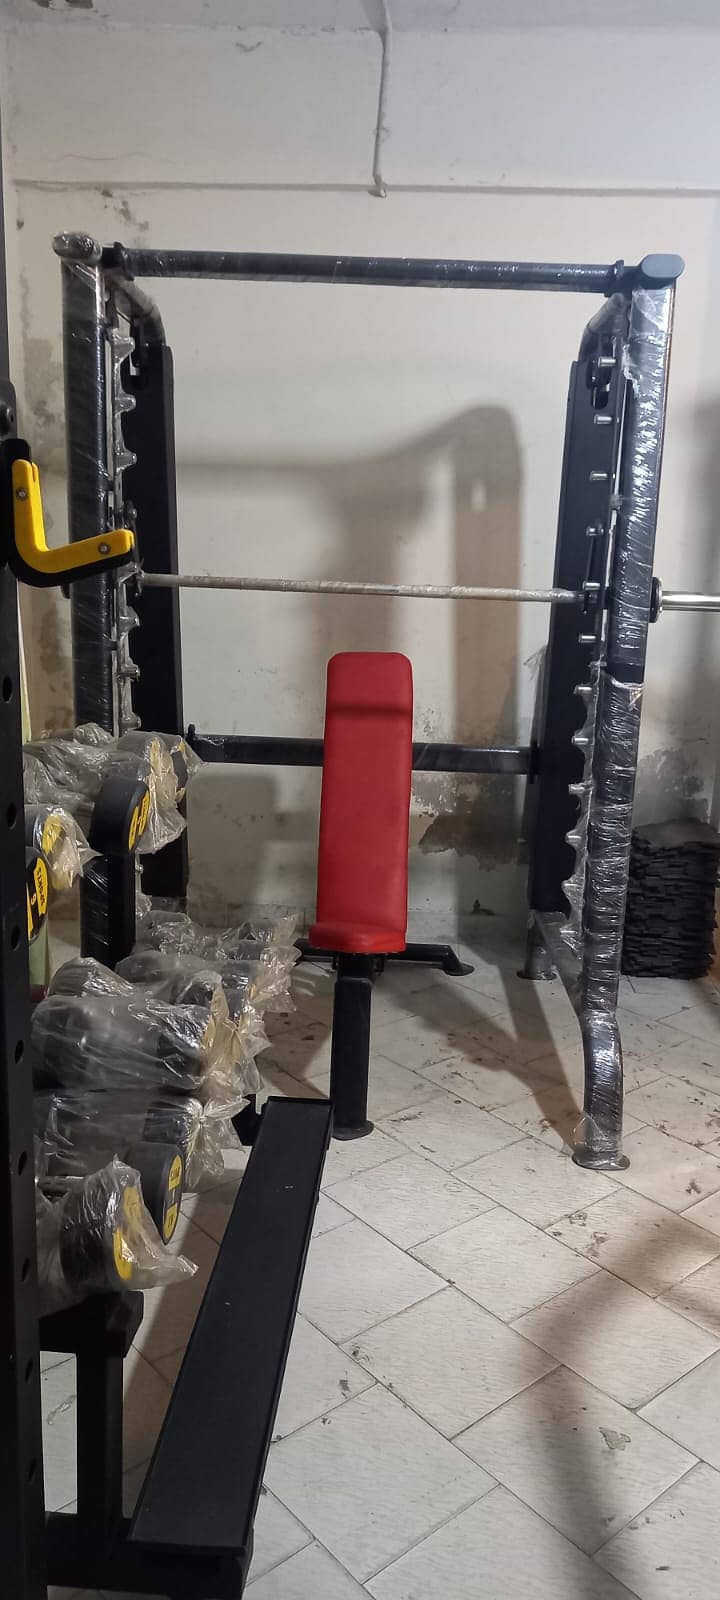 gym setup dumbel |commercial treadmill | elliptical | bench plate rods 16